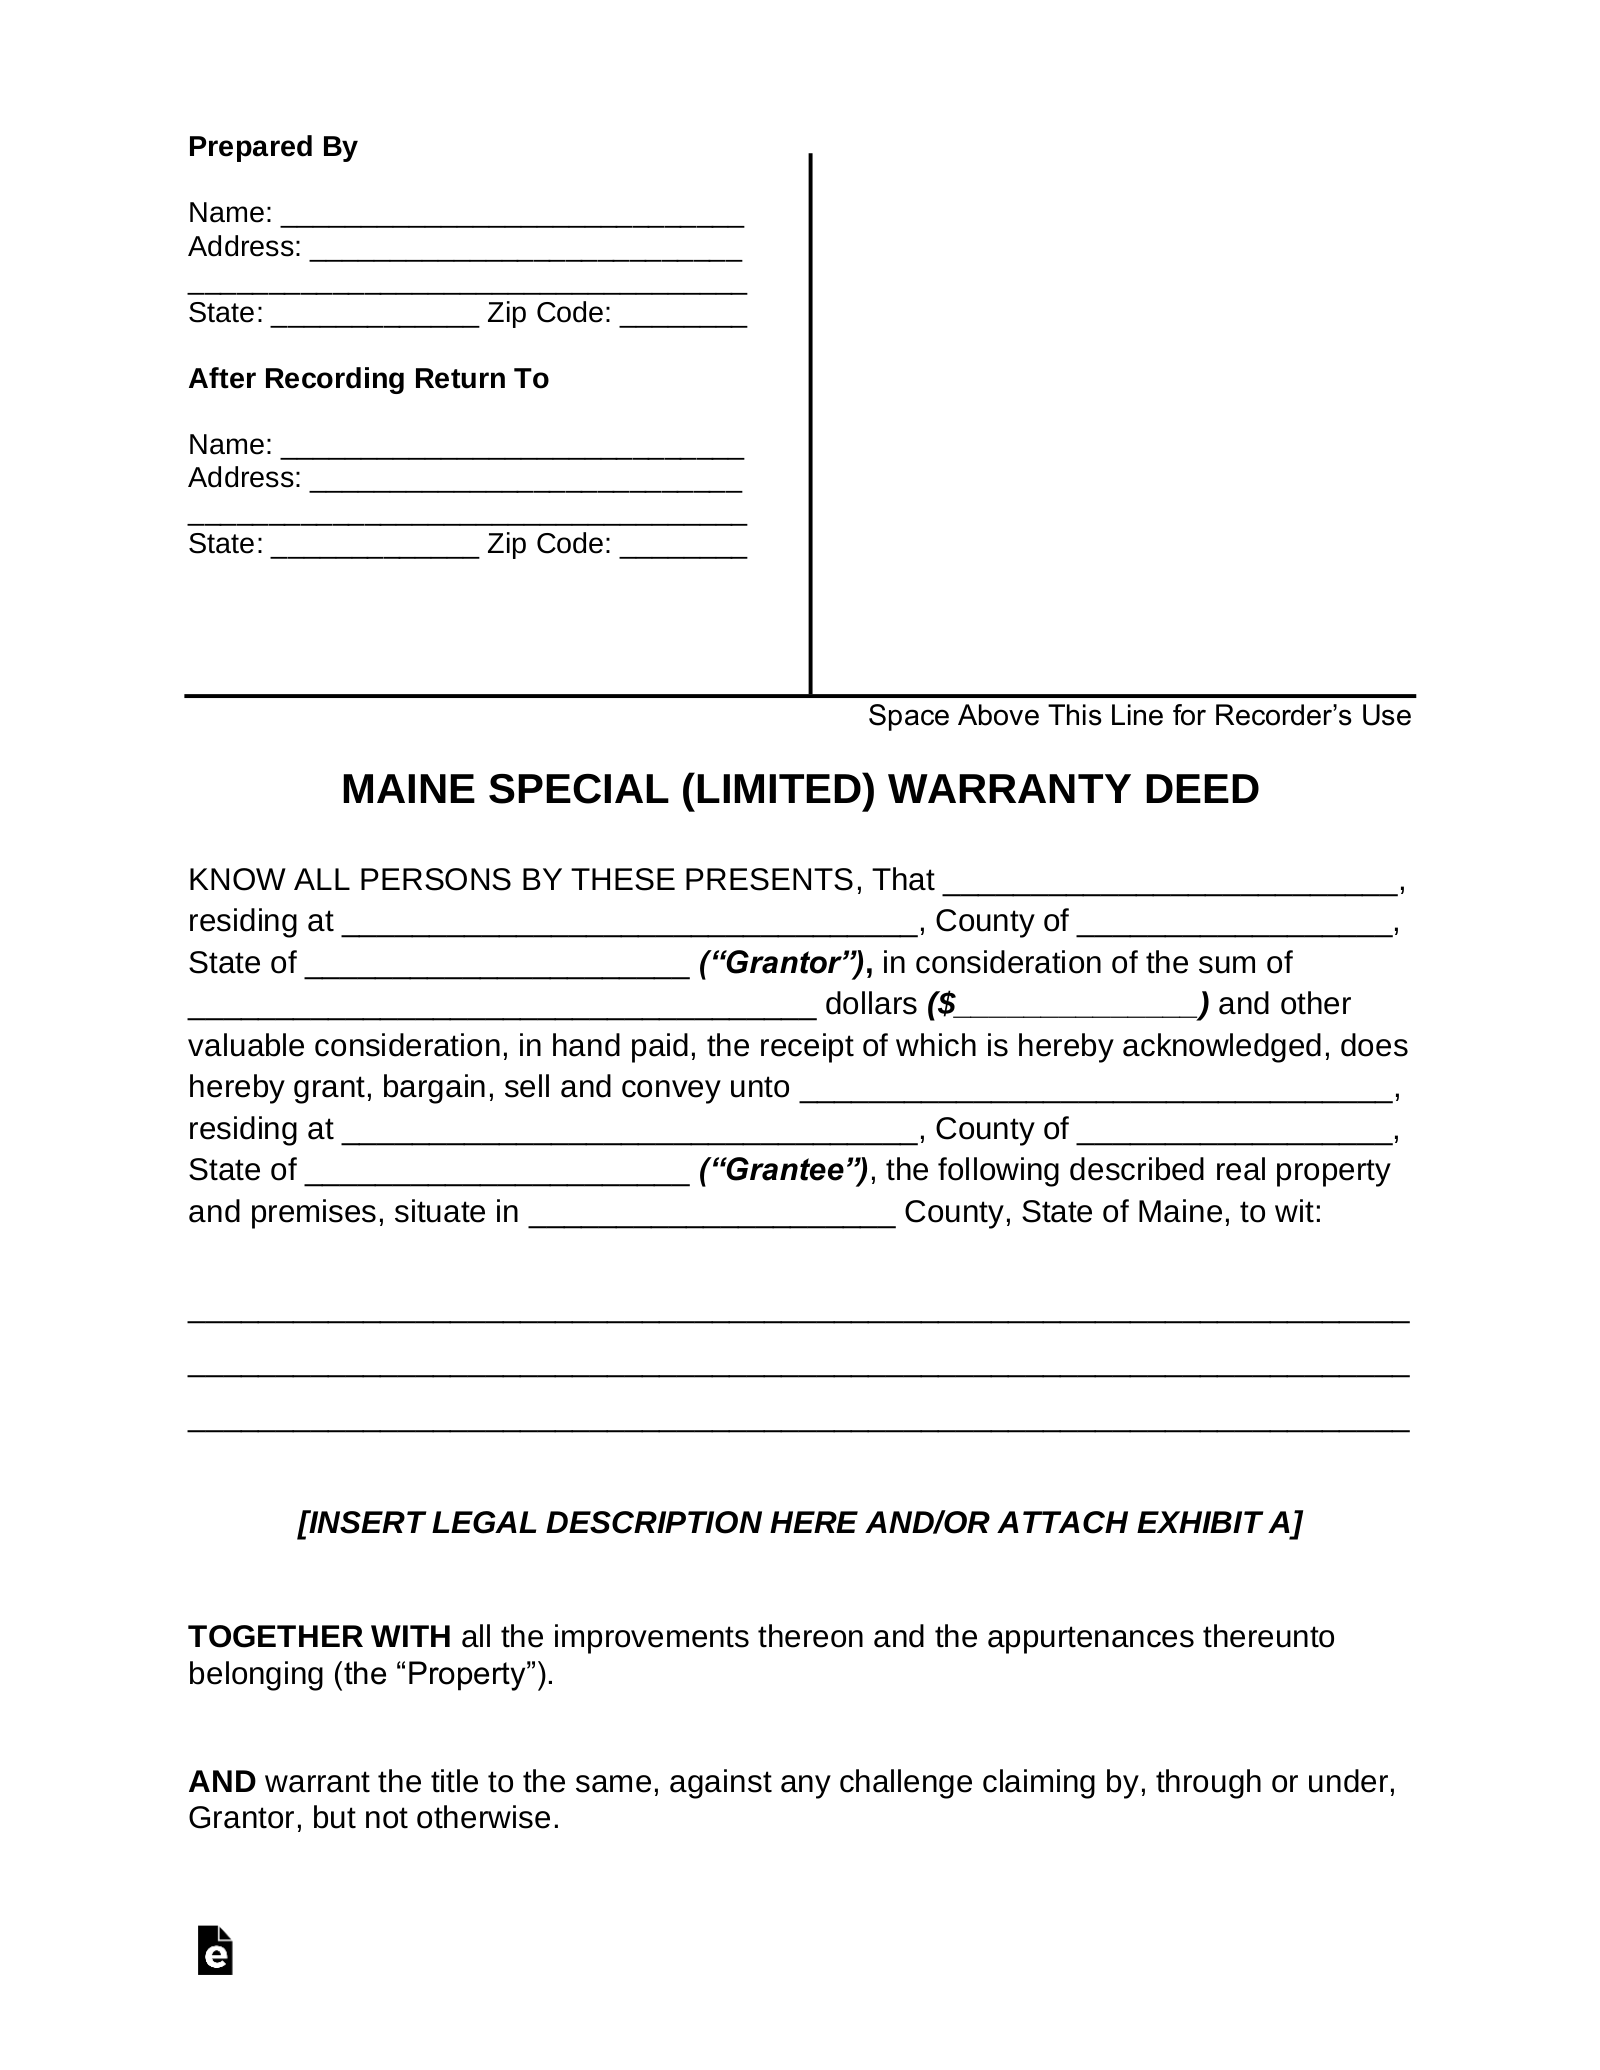 Maine Special Warranty Deed Form